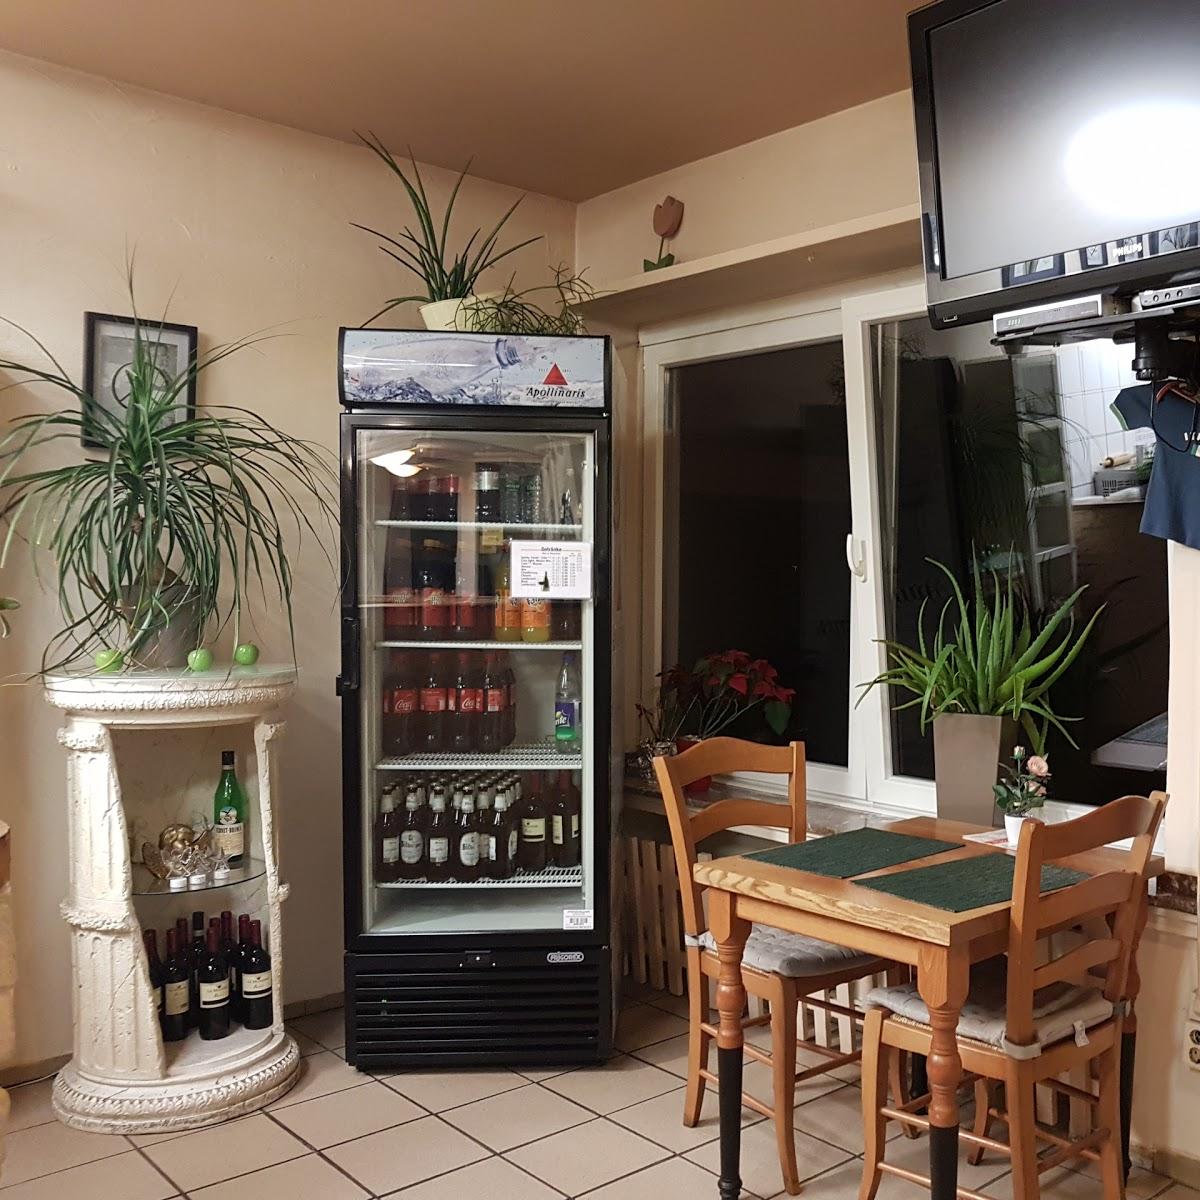 Restaurant "Pizzeria Nido 3" in Mönchengladbach